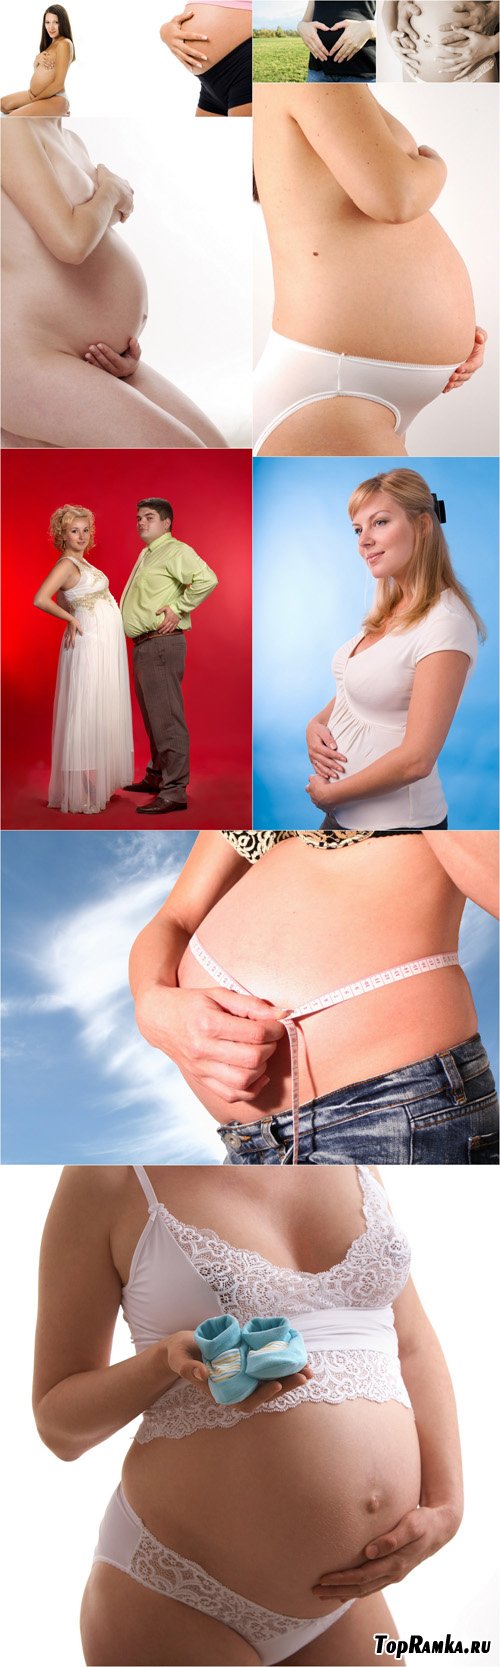 Photo Cliparts - Pregnant woman